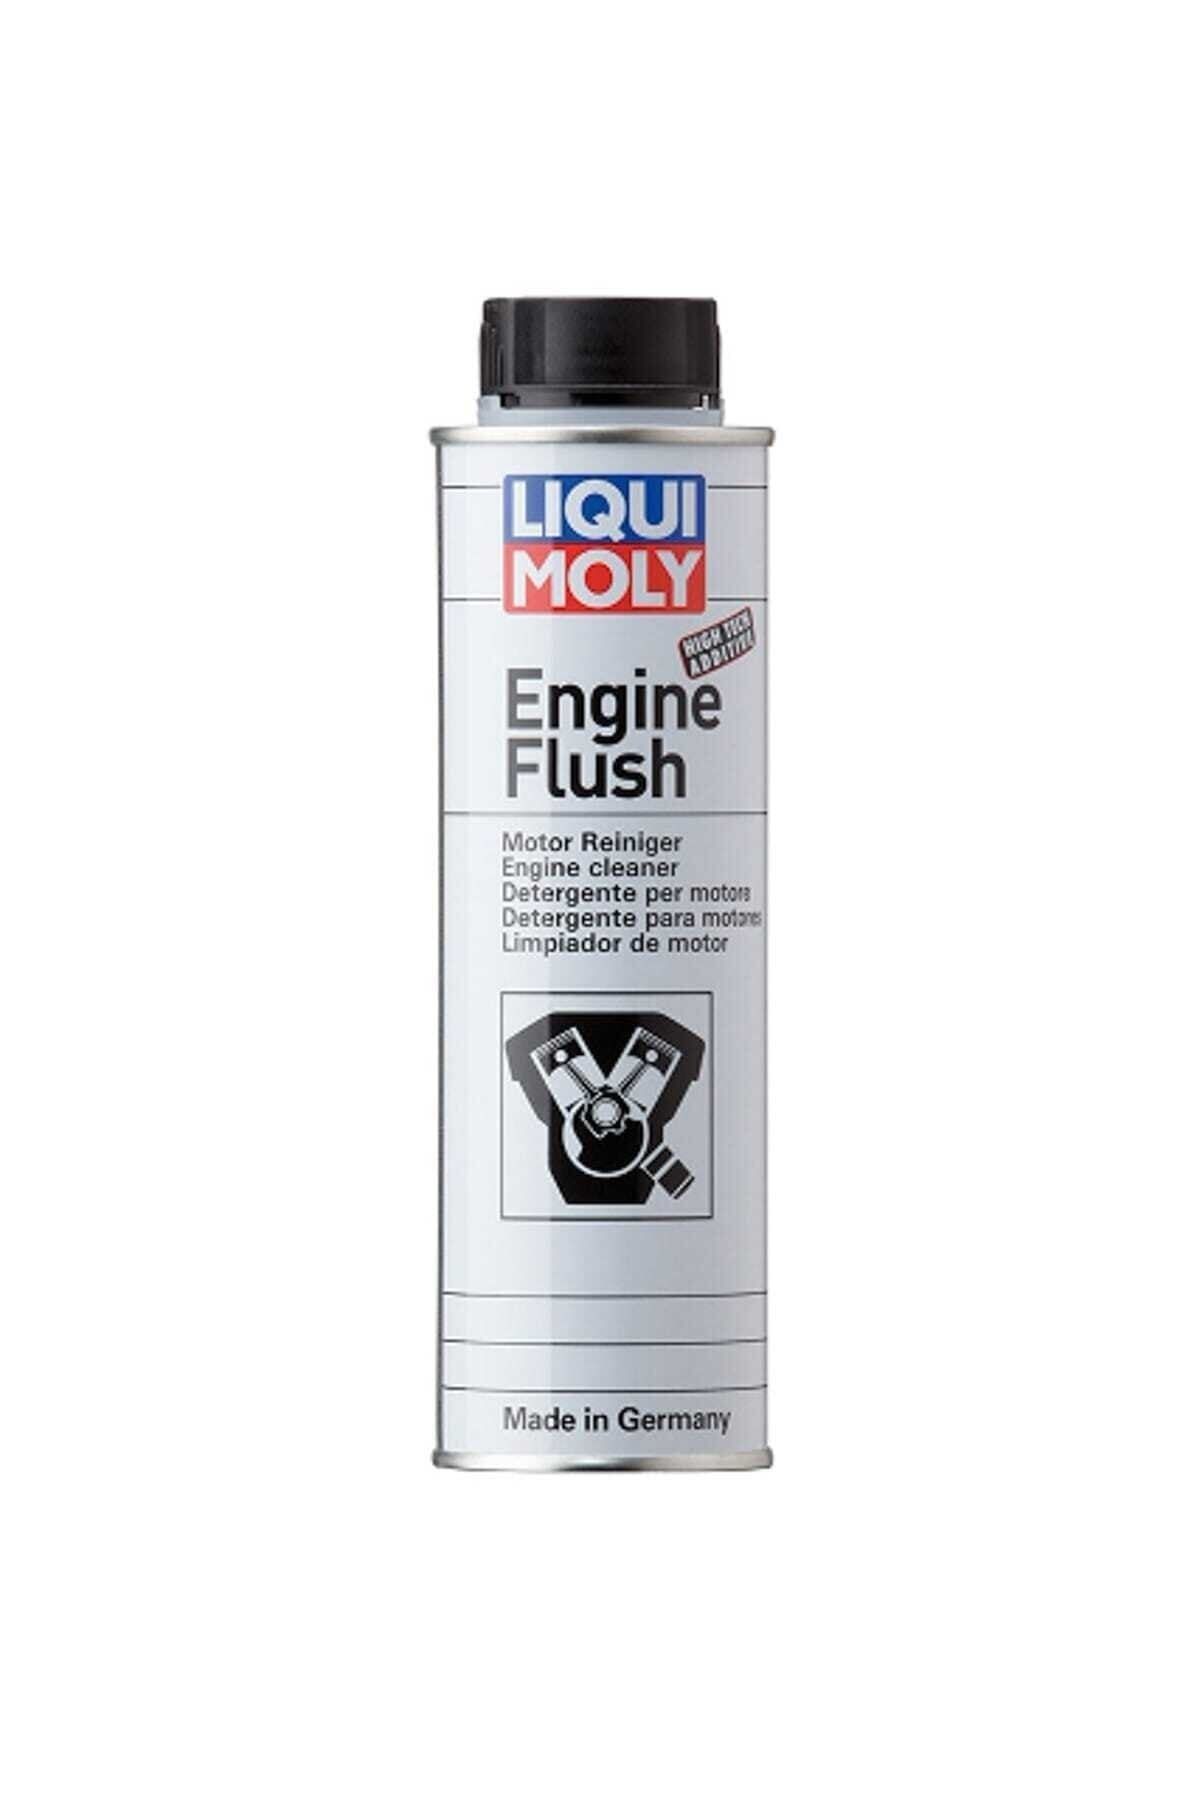 Liqui Moly Engine Flush & Motor Içi Temizleyici 300 ml. 2640